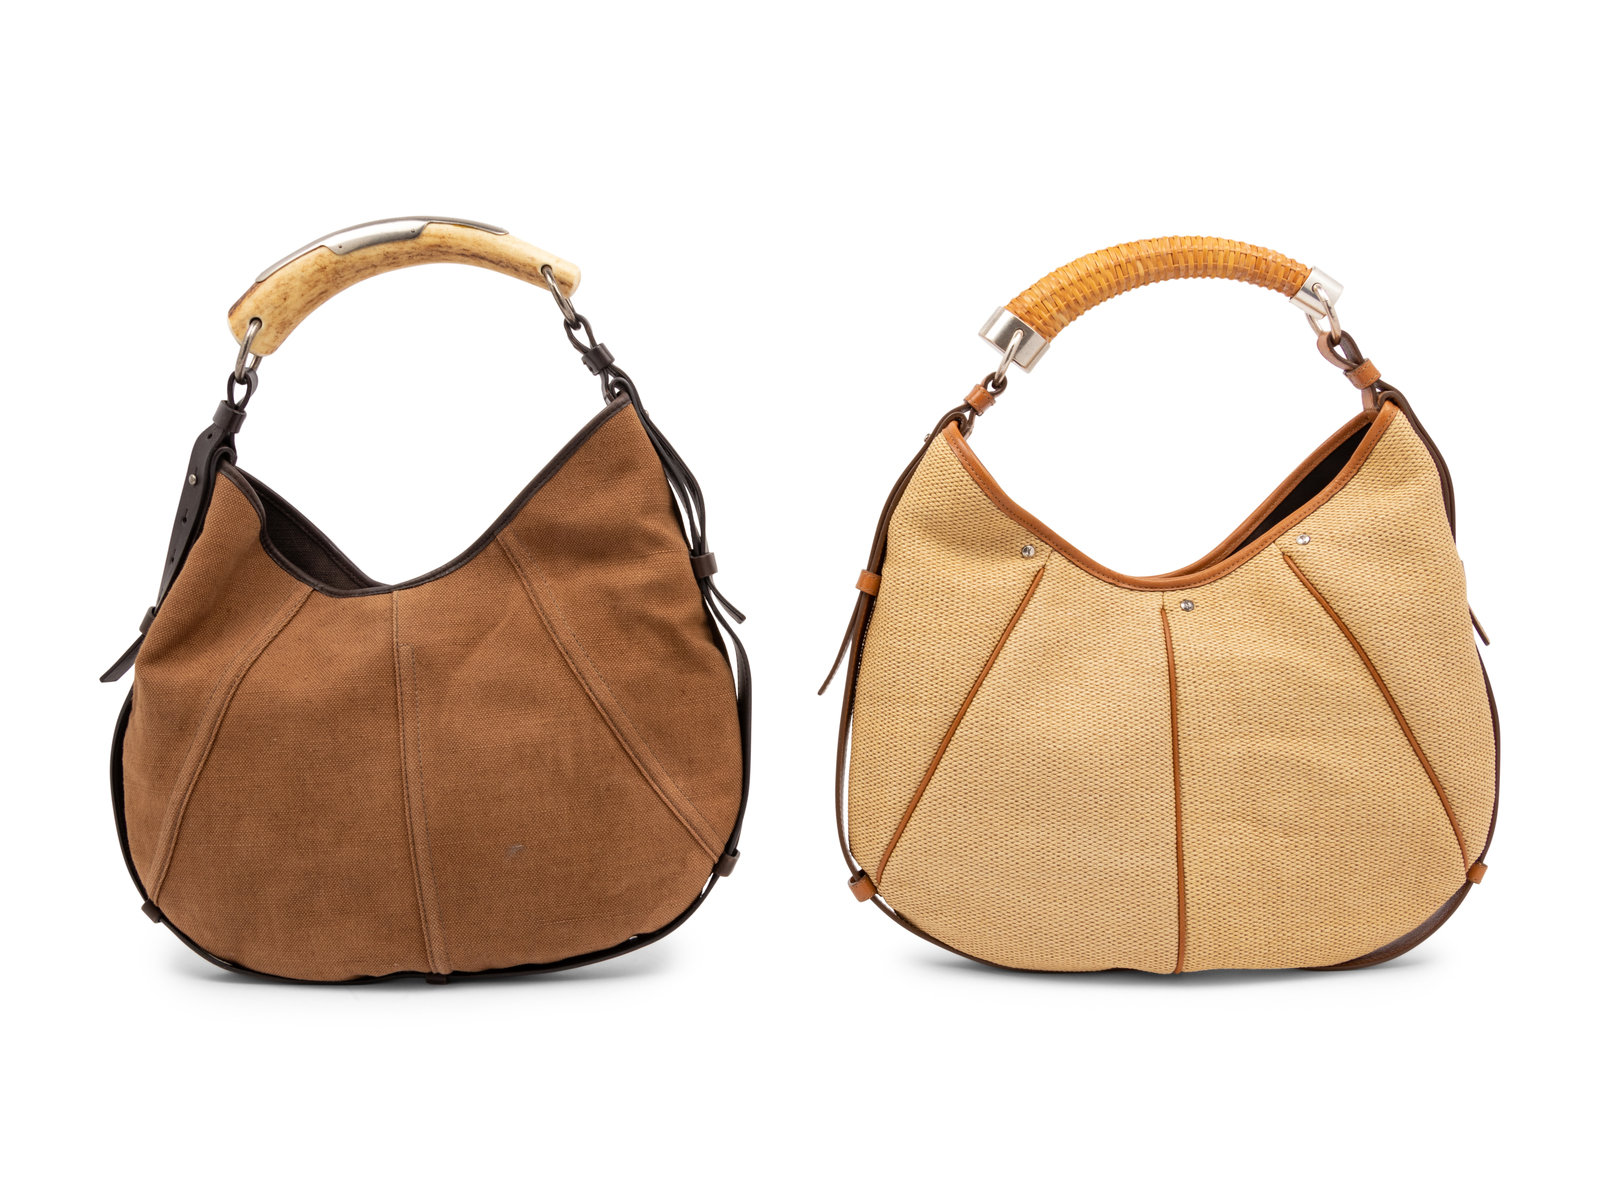 Yves Saint Laurent Handbags for sale in Milwaukee, Wisconsin